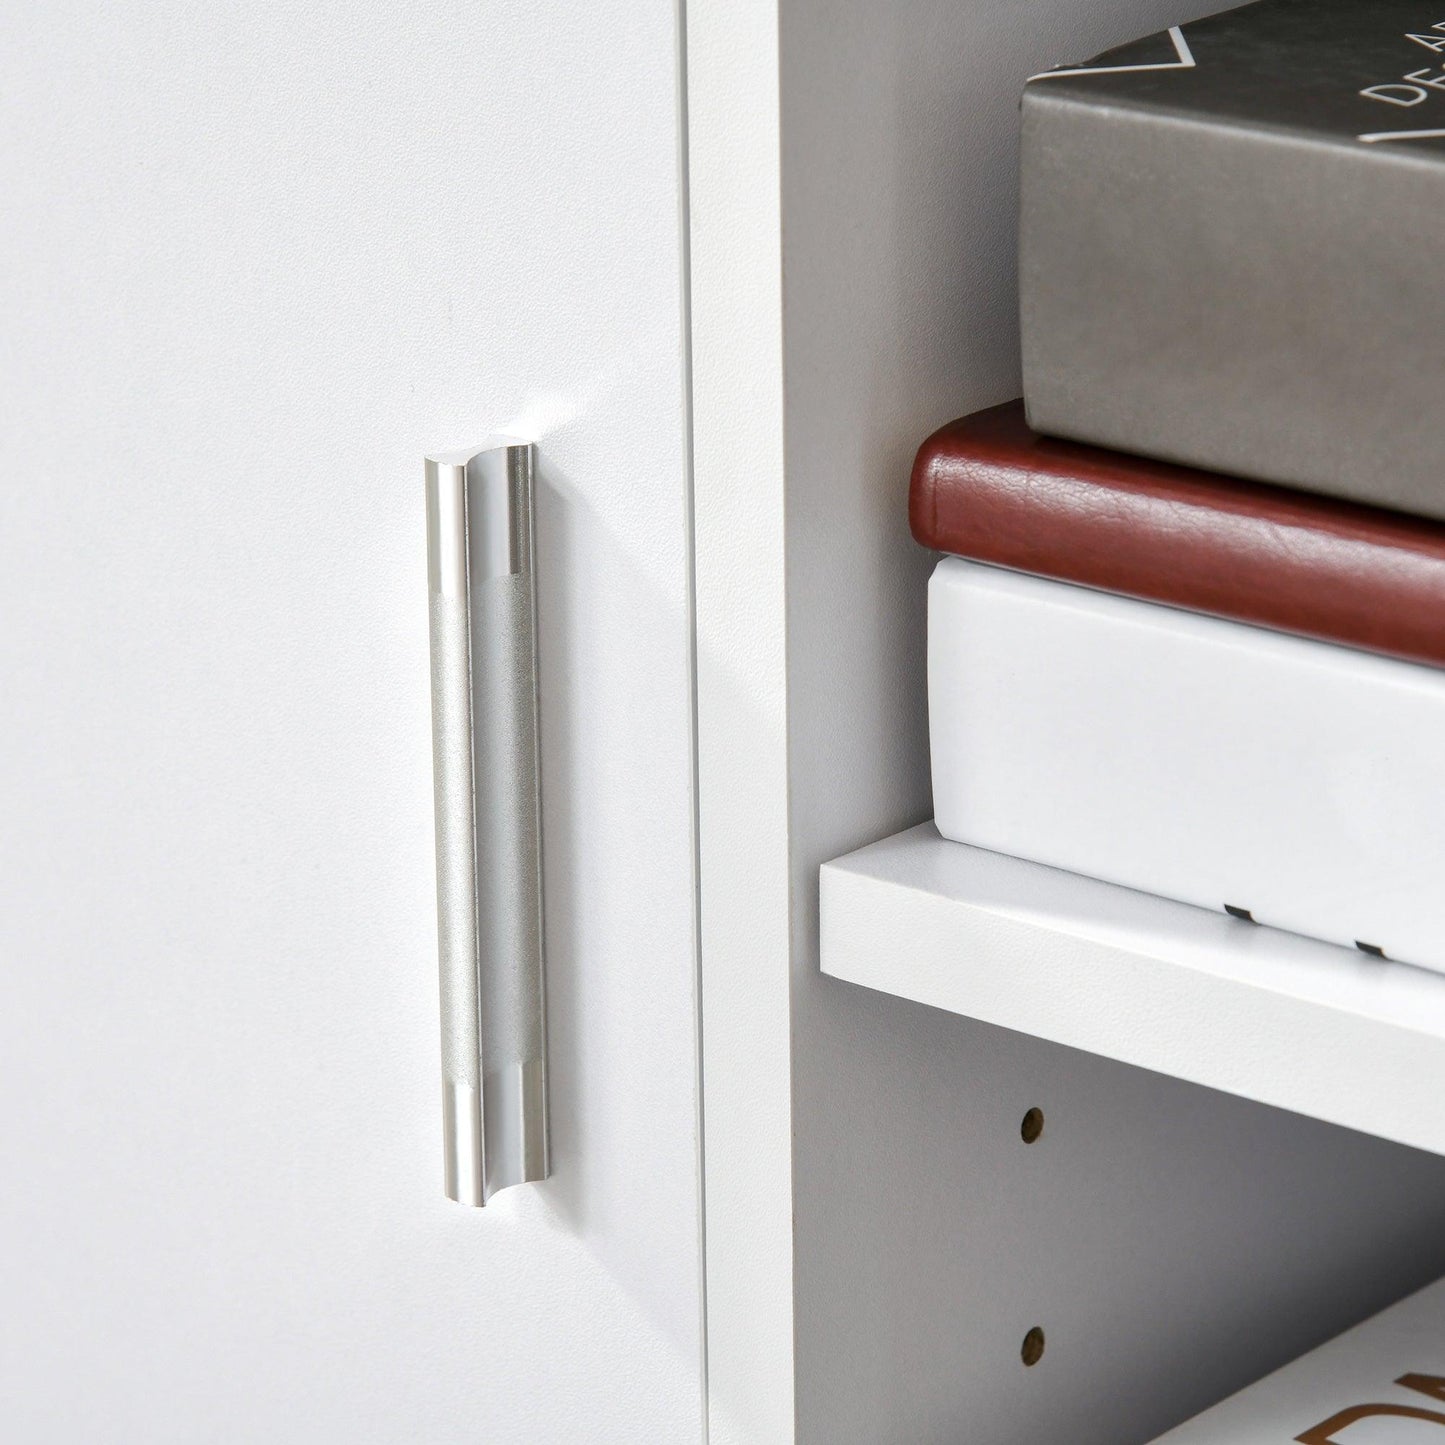 HOMCOM White Printer Stand with Storage - Compact & Mobile - ALL4U RETAILER LTD